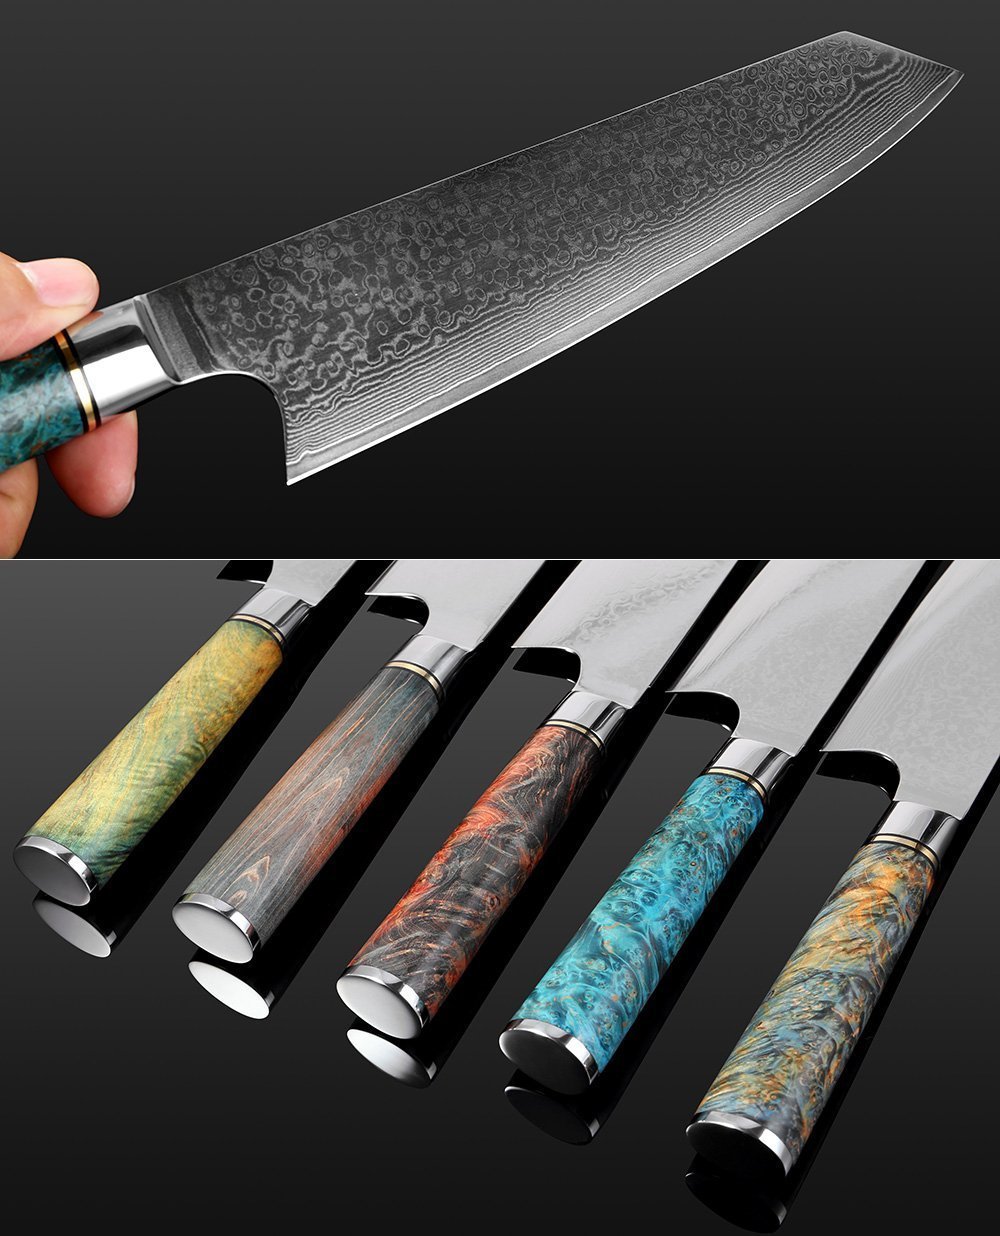 Letcase 8-inch Damascus VG10 Steel Kitchen Knives - Letcase